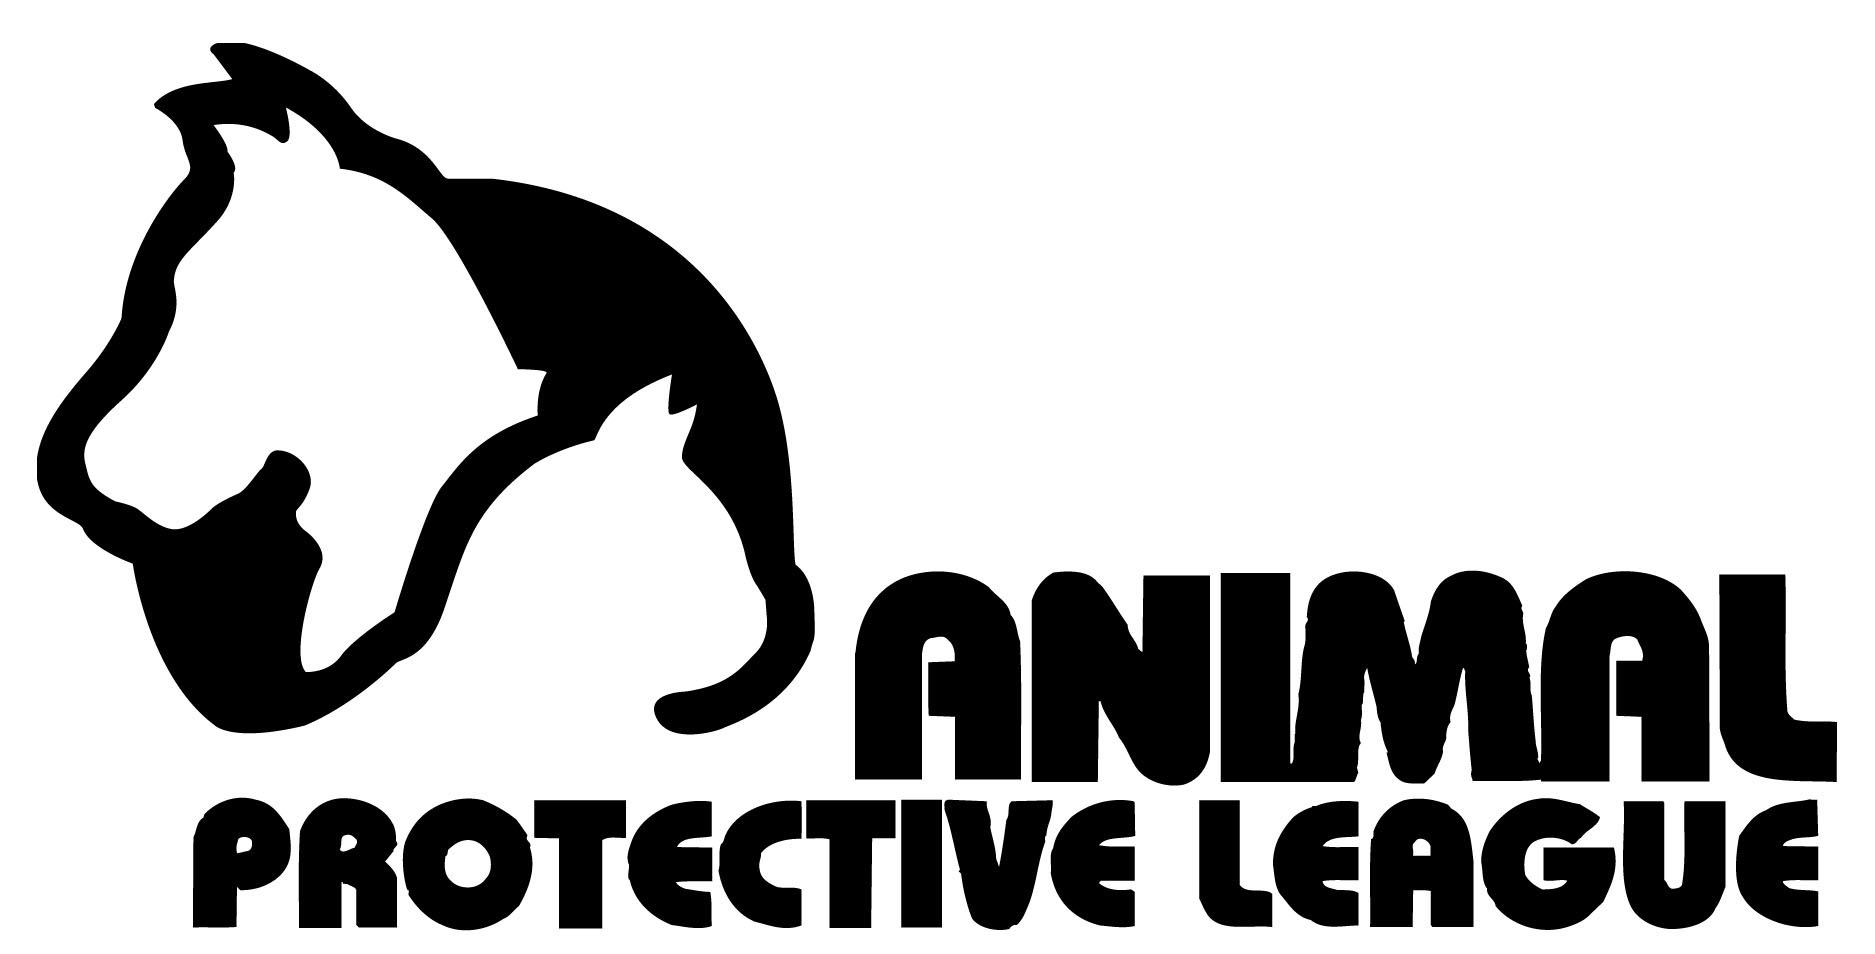 Animal Protective League